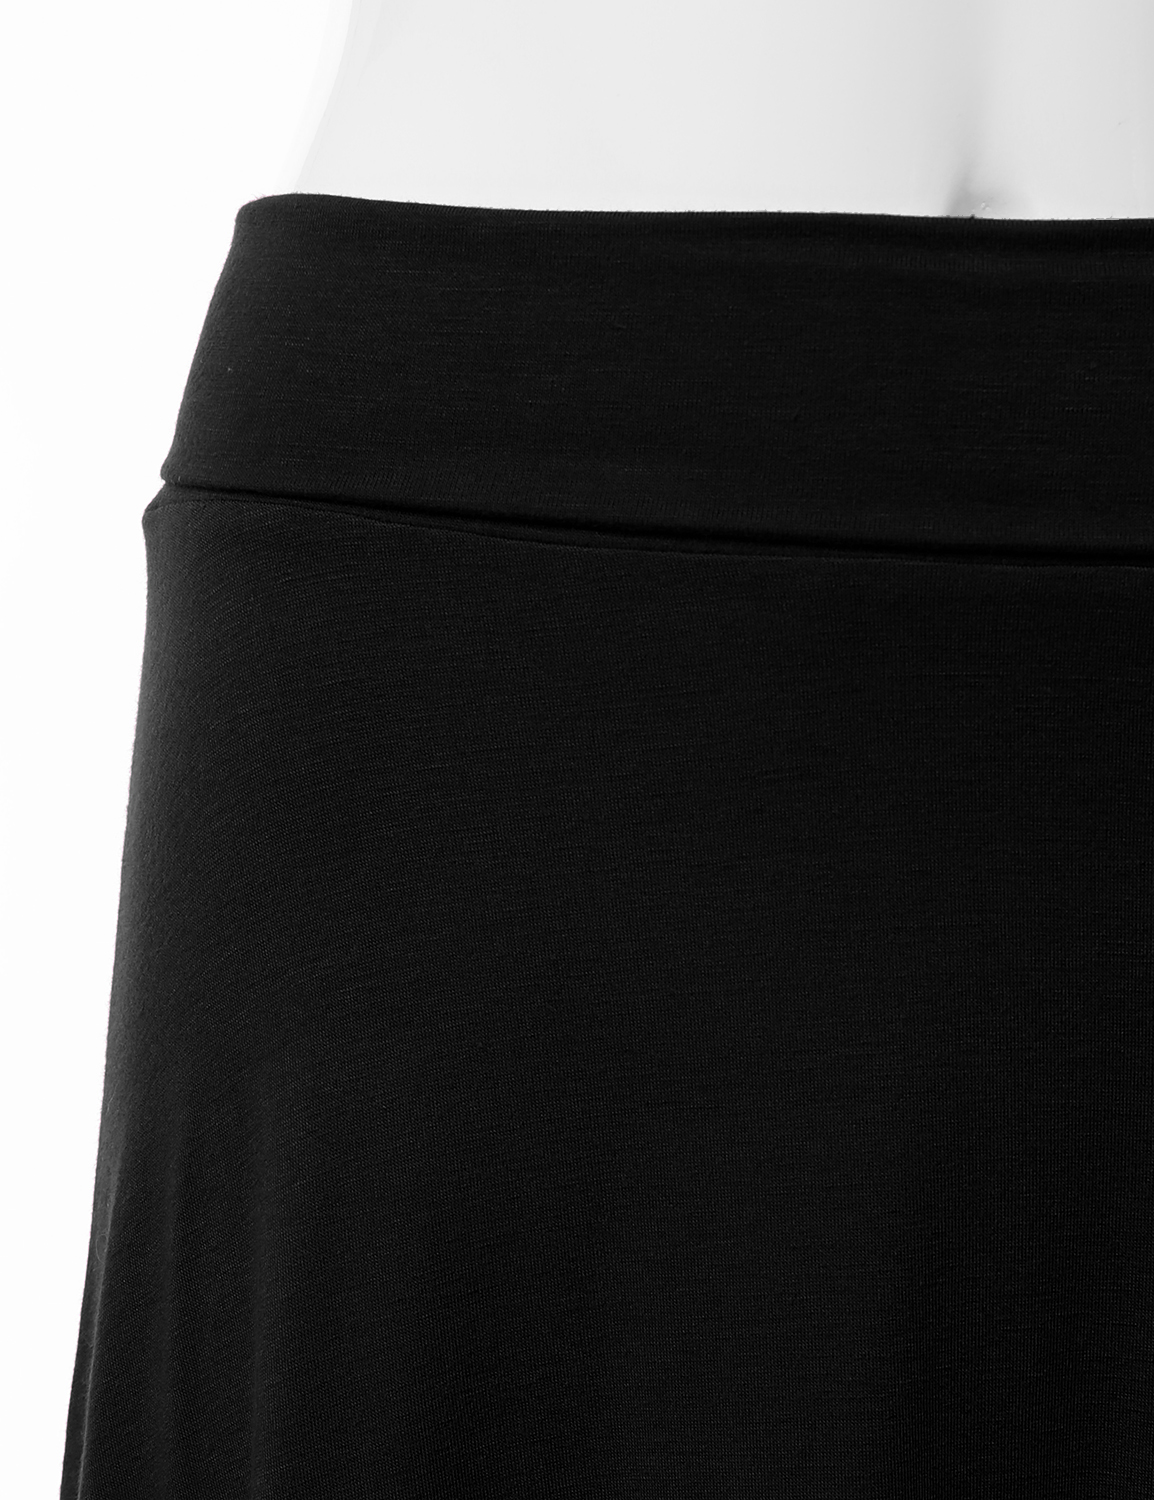 Doublju Women's High Waist Elastic Soft Flare Flowy Midi Skirt (Plus ...